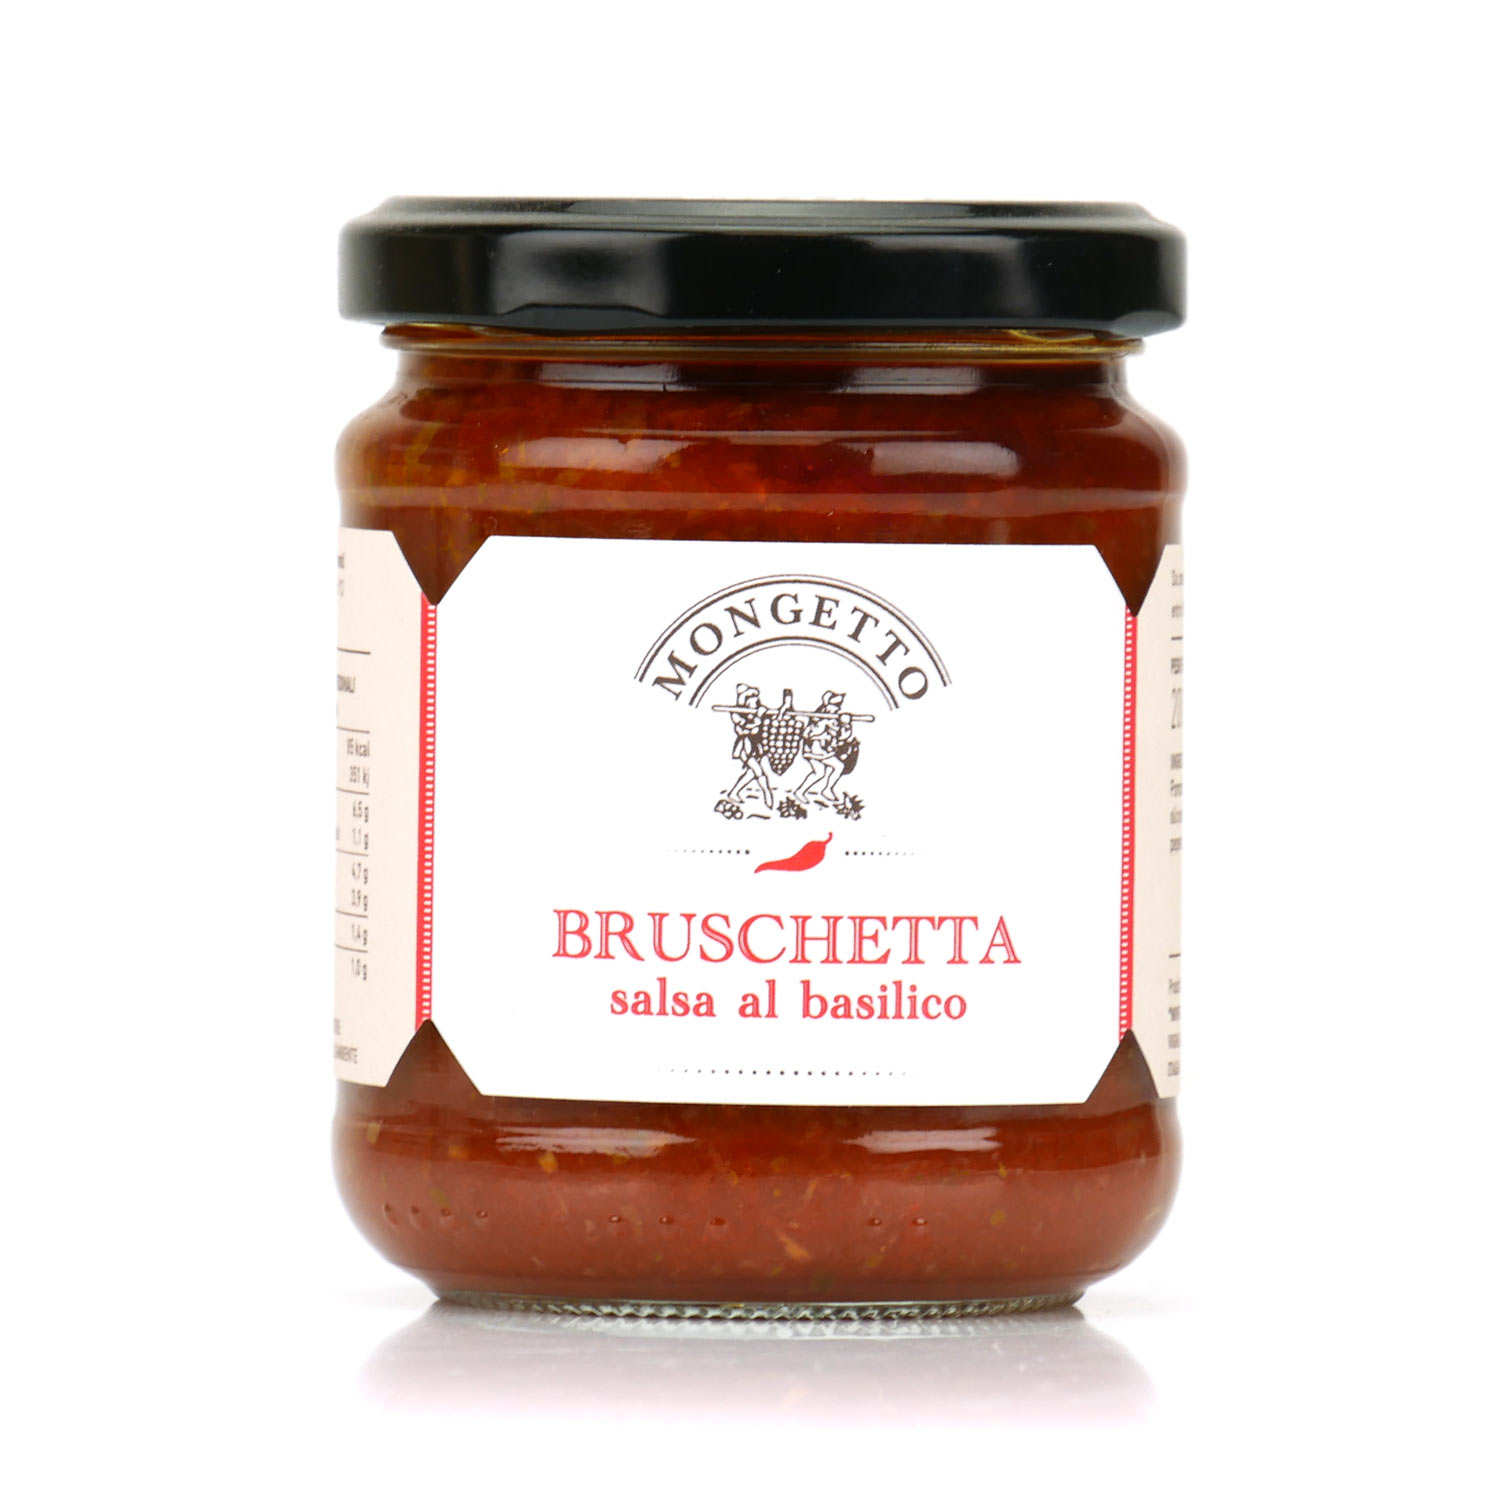 Bruschetta sauce with basil - Il Mongetto